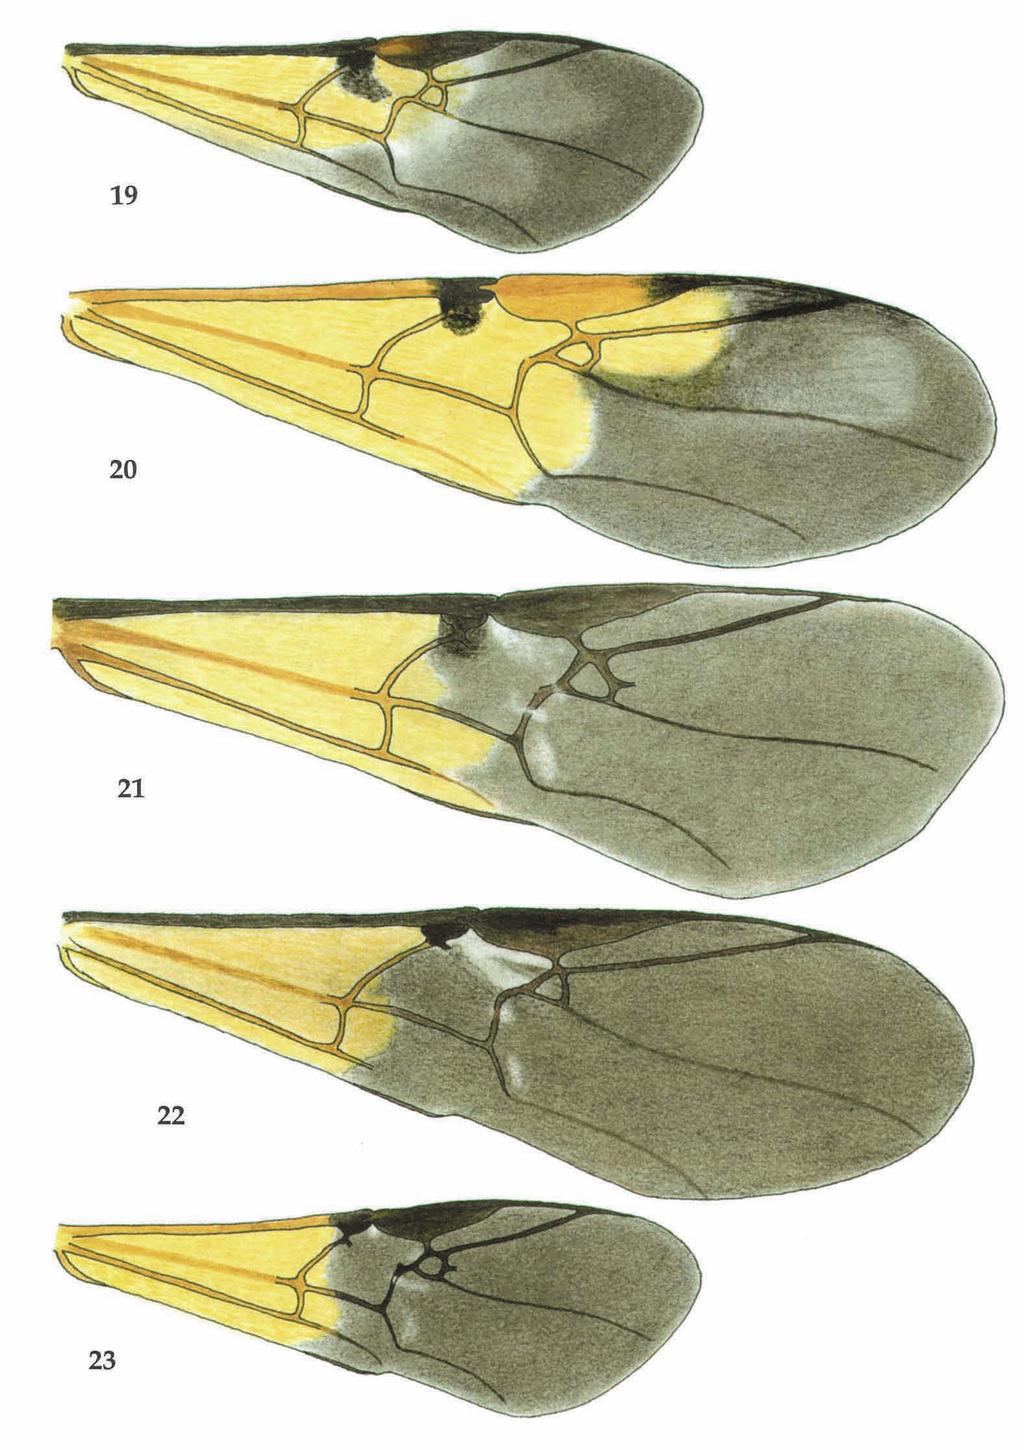 Simbolotti & van Achterberg. Euagathis from the Sunda Islands. Zool. Verh. Leiden 293 (1994) 13 Figs 19-23, colour pattern of fore wing of Euagathis spp.